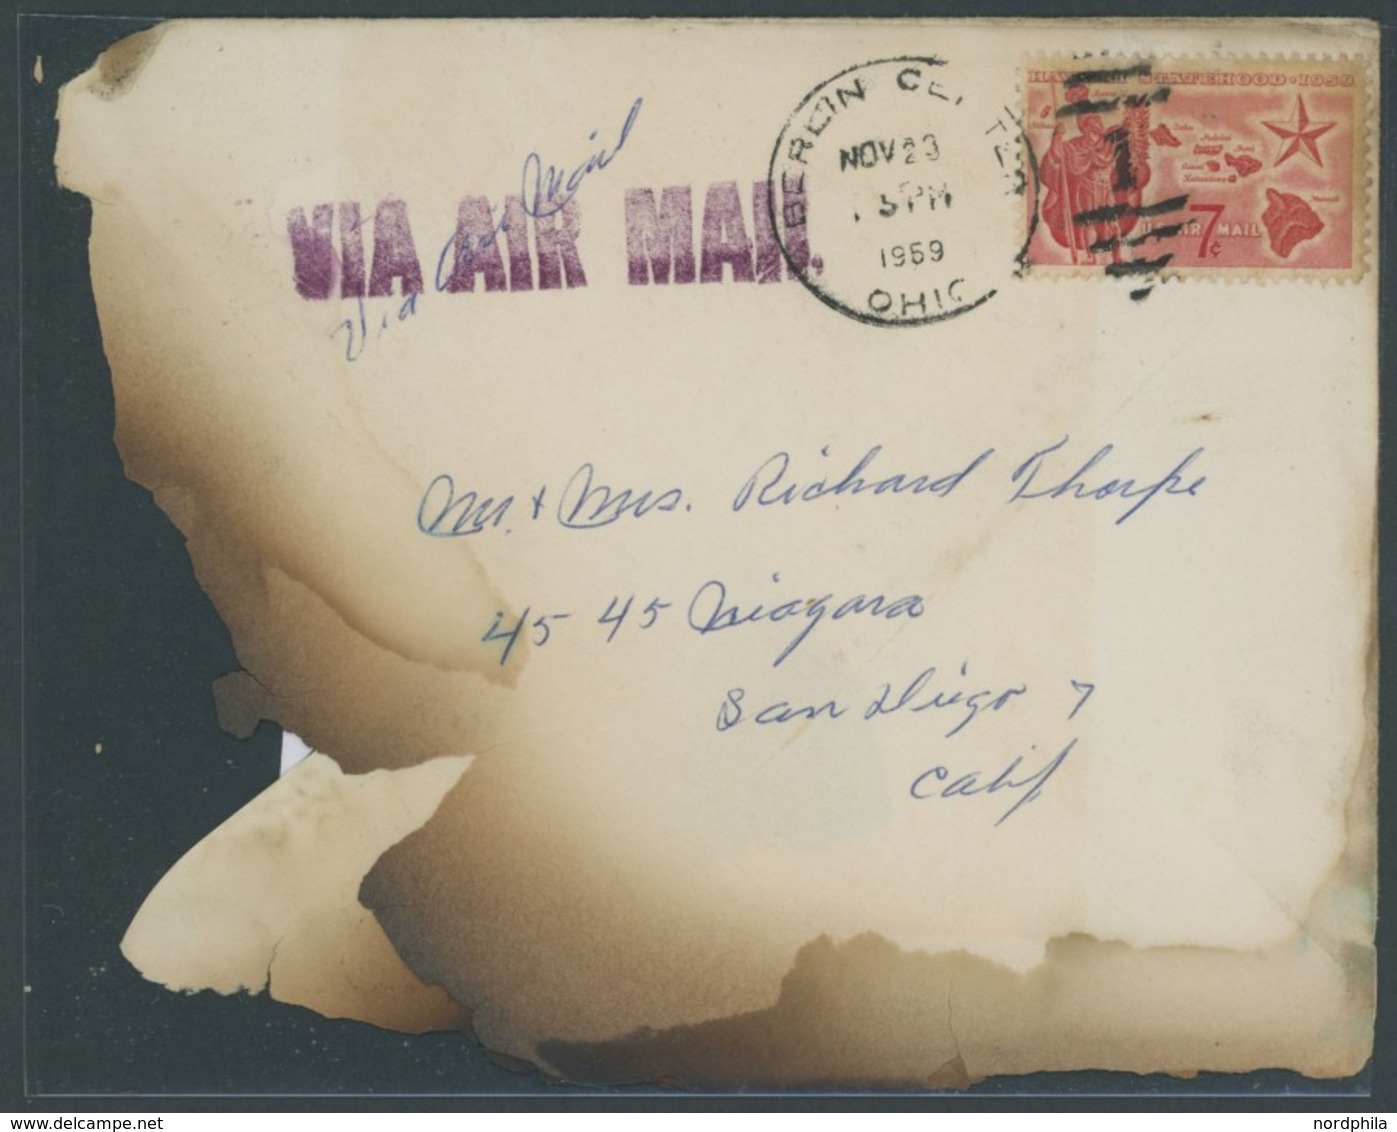 HAWAII 1959, Rückseitiger Aufkleber CHICAGO POST OFFICE ENCLOSURE RECOVERED FROM PLANE WRECK 11-24-59 Auf Angebräuntem T - Hawai